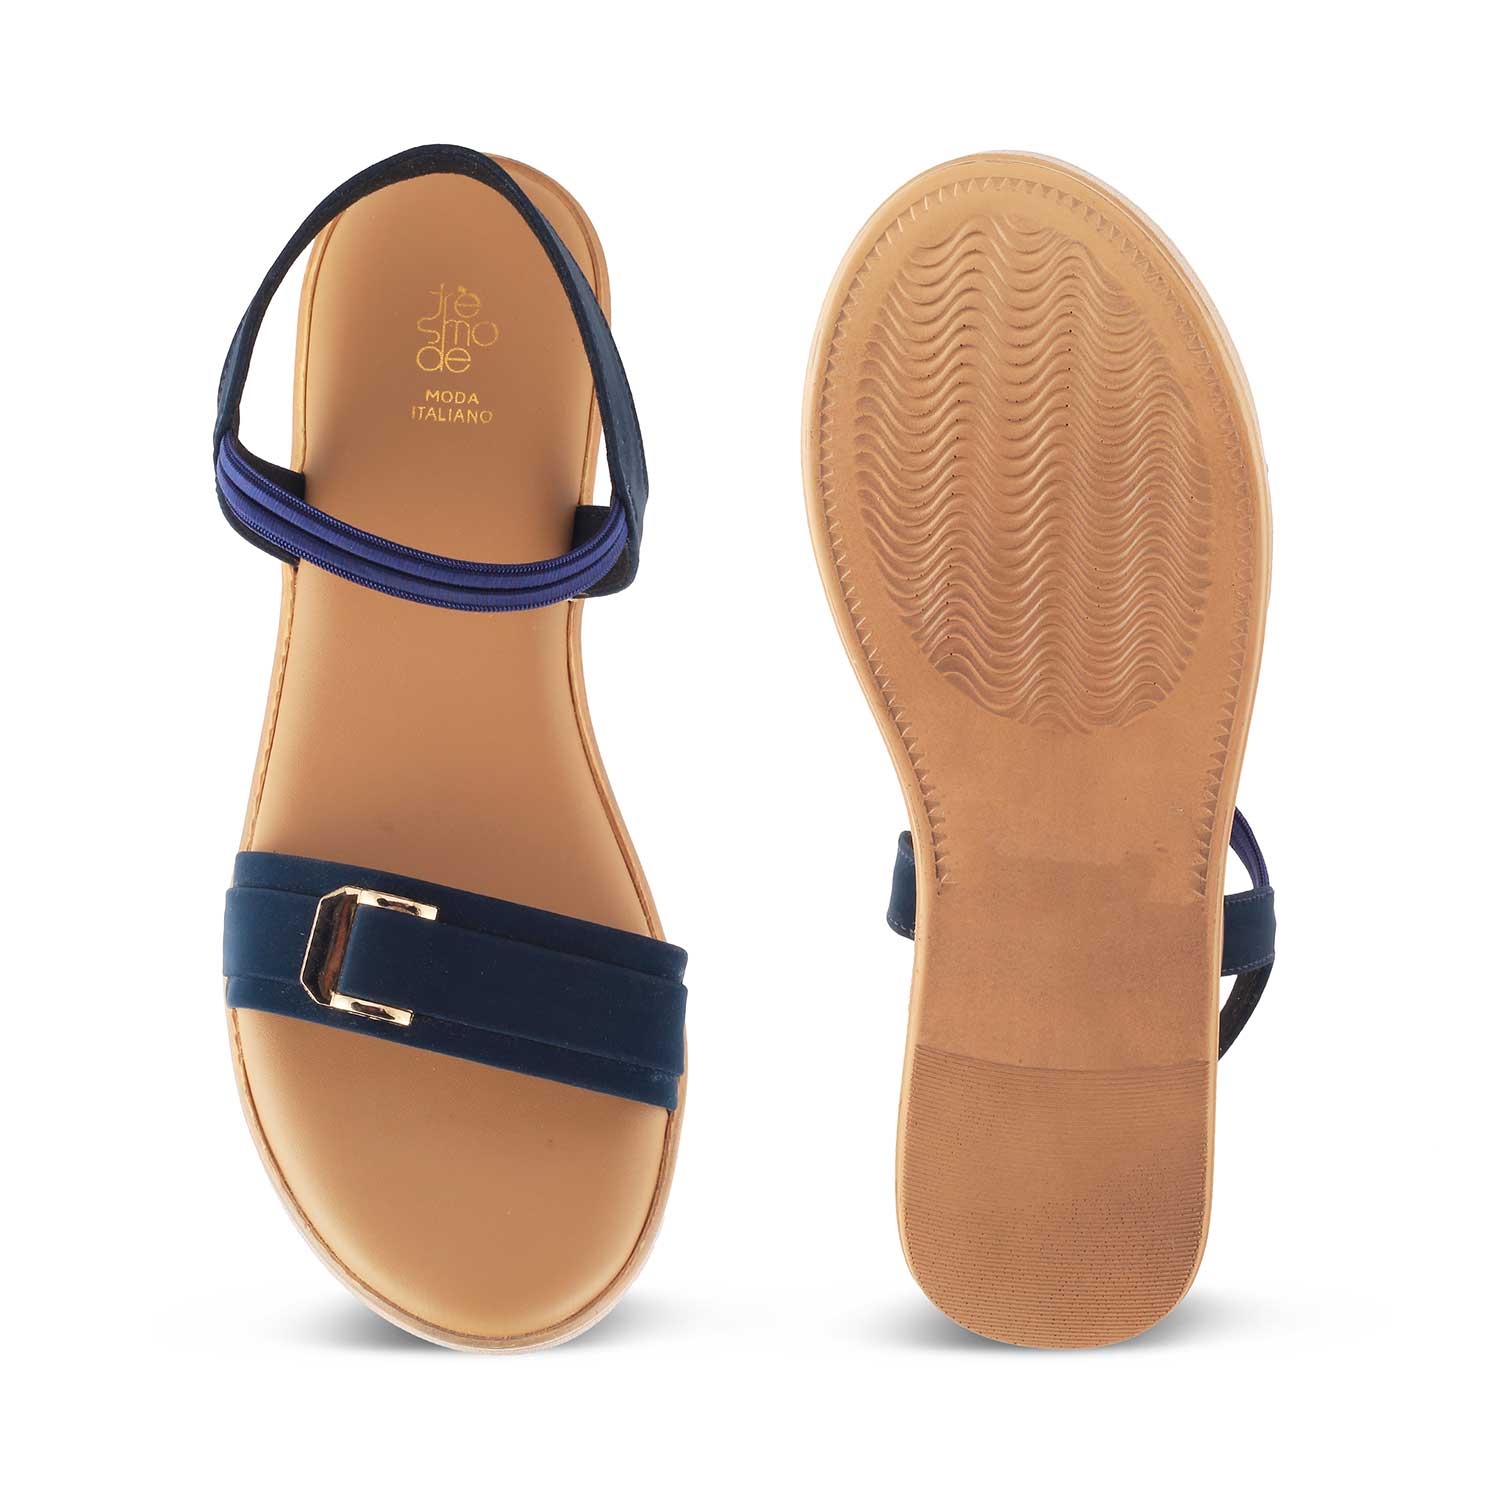 The Caen Blue Women's Platform Wedge Sandals Tresmode - Tresmode